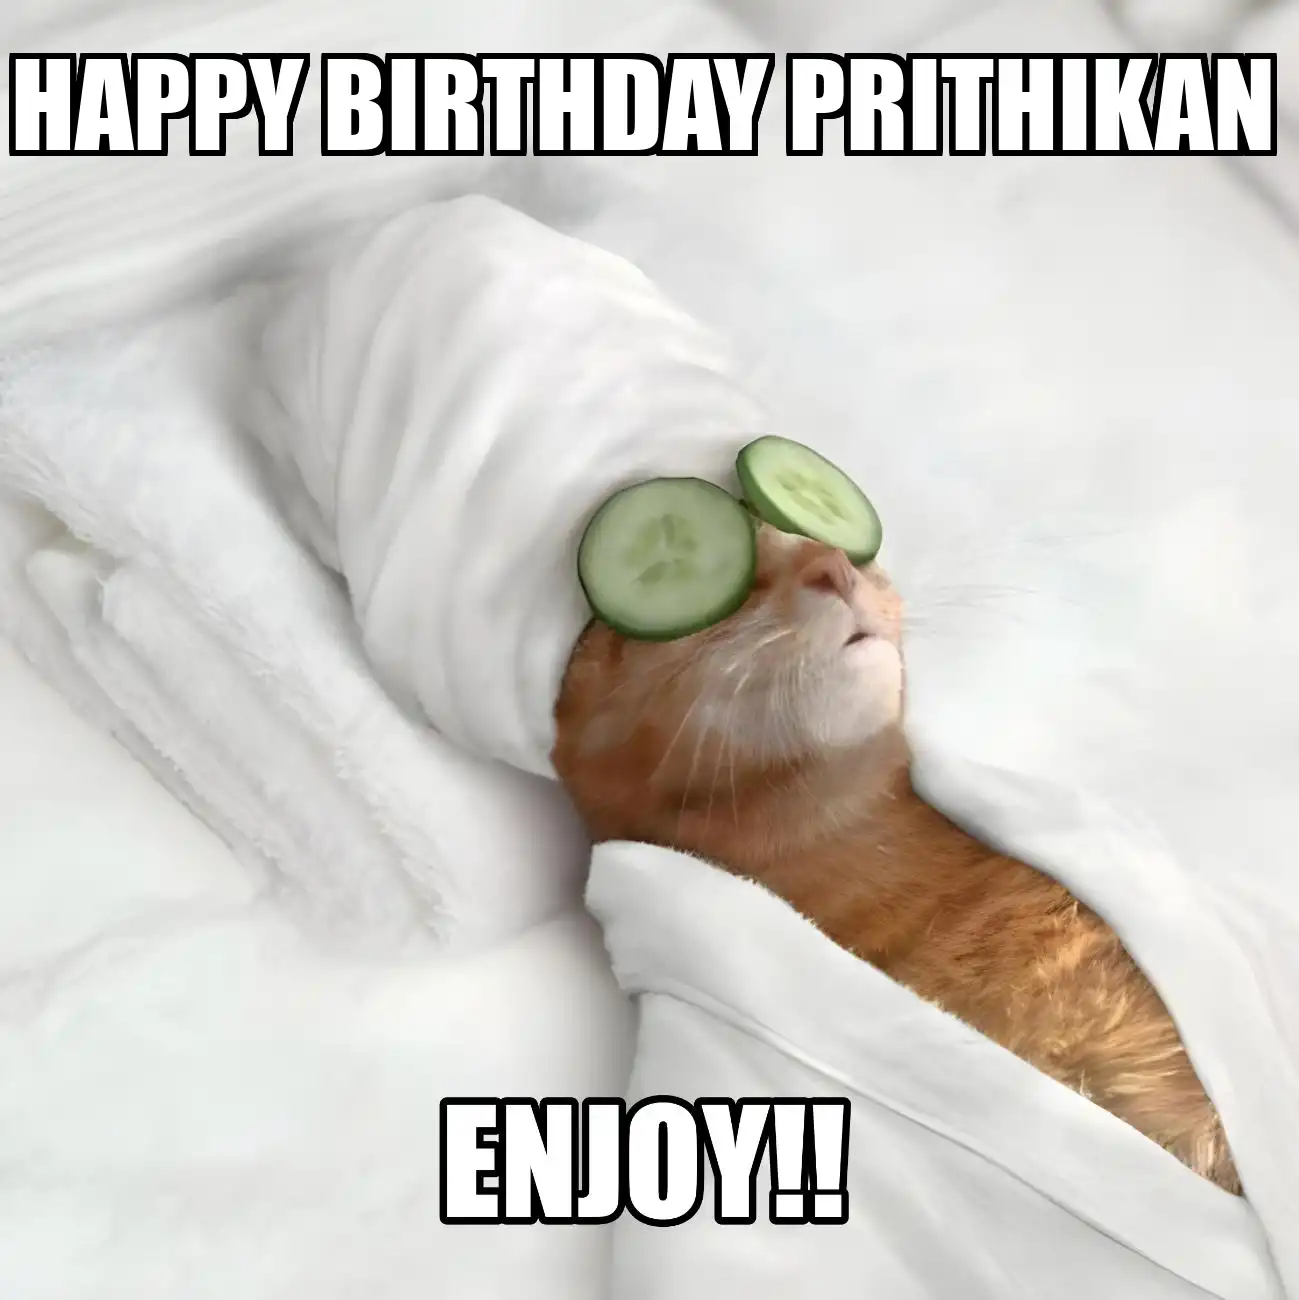 Happy Birthday Prithikan Enjoy Cat Meme